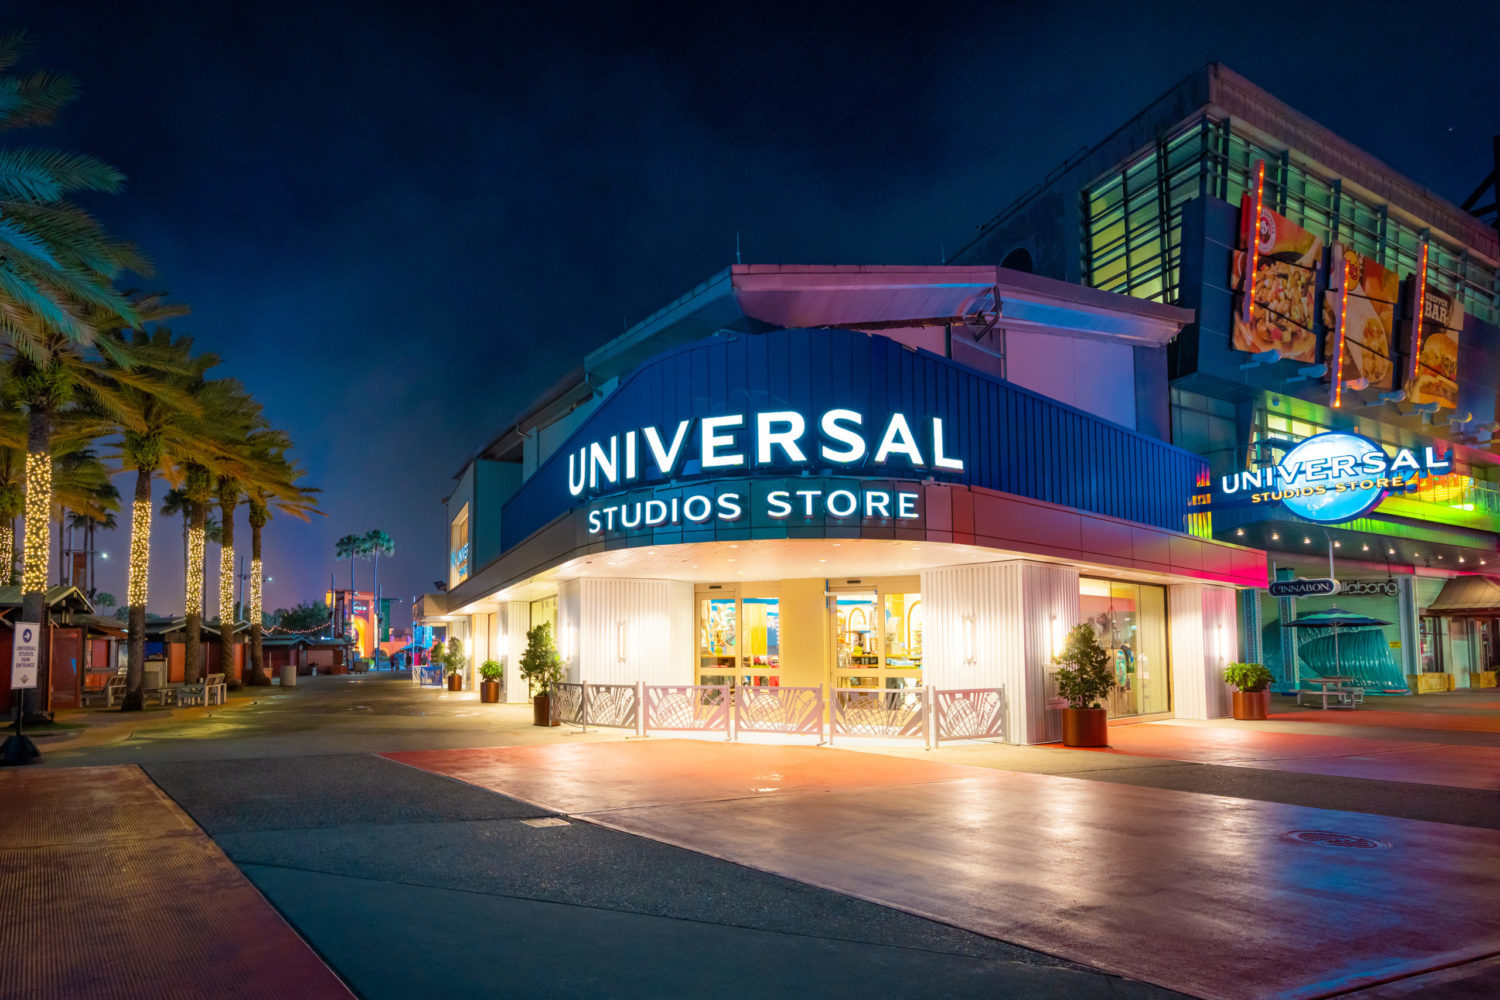 Inside the new Universal Studios Store